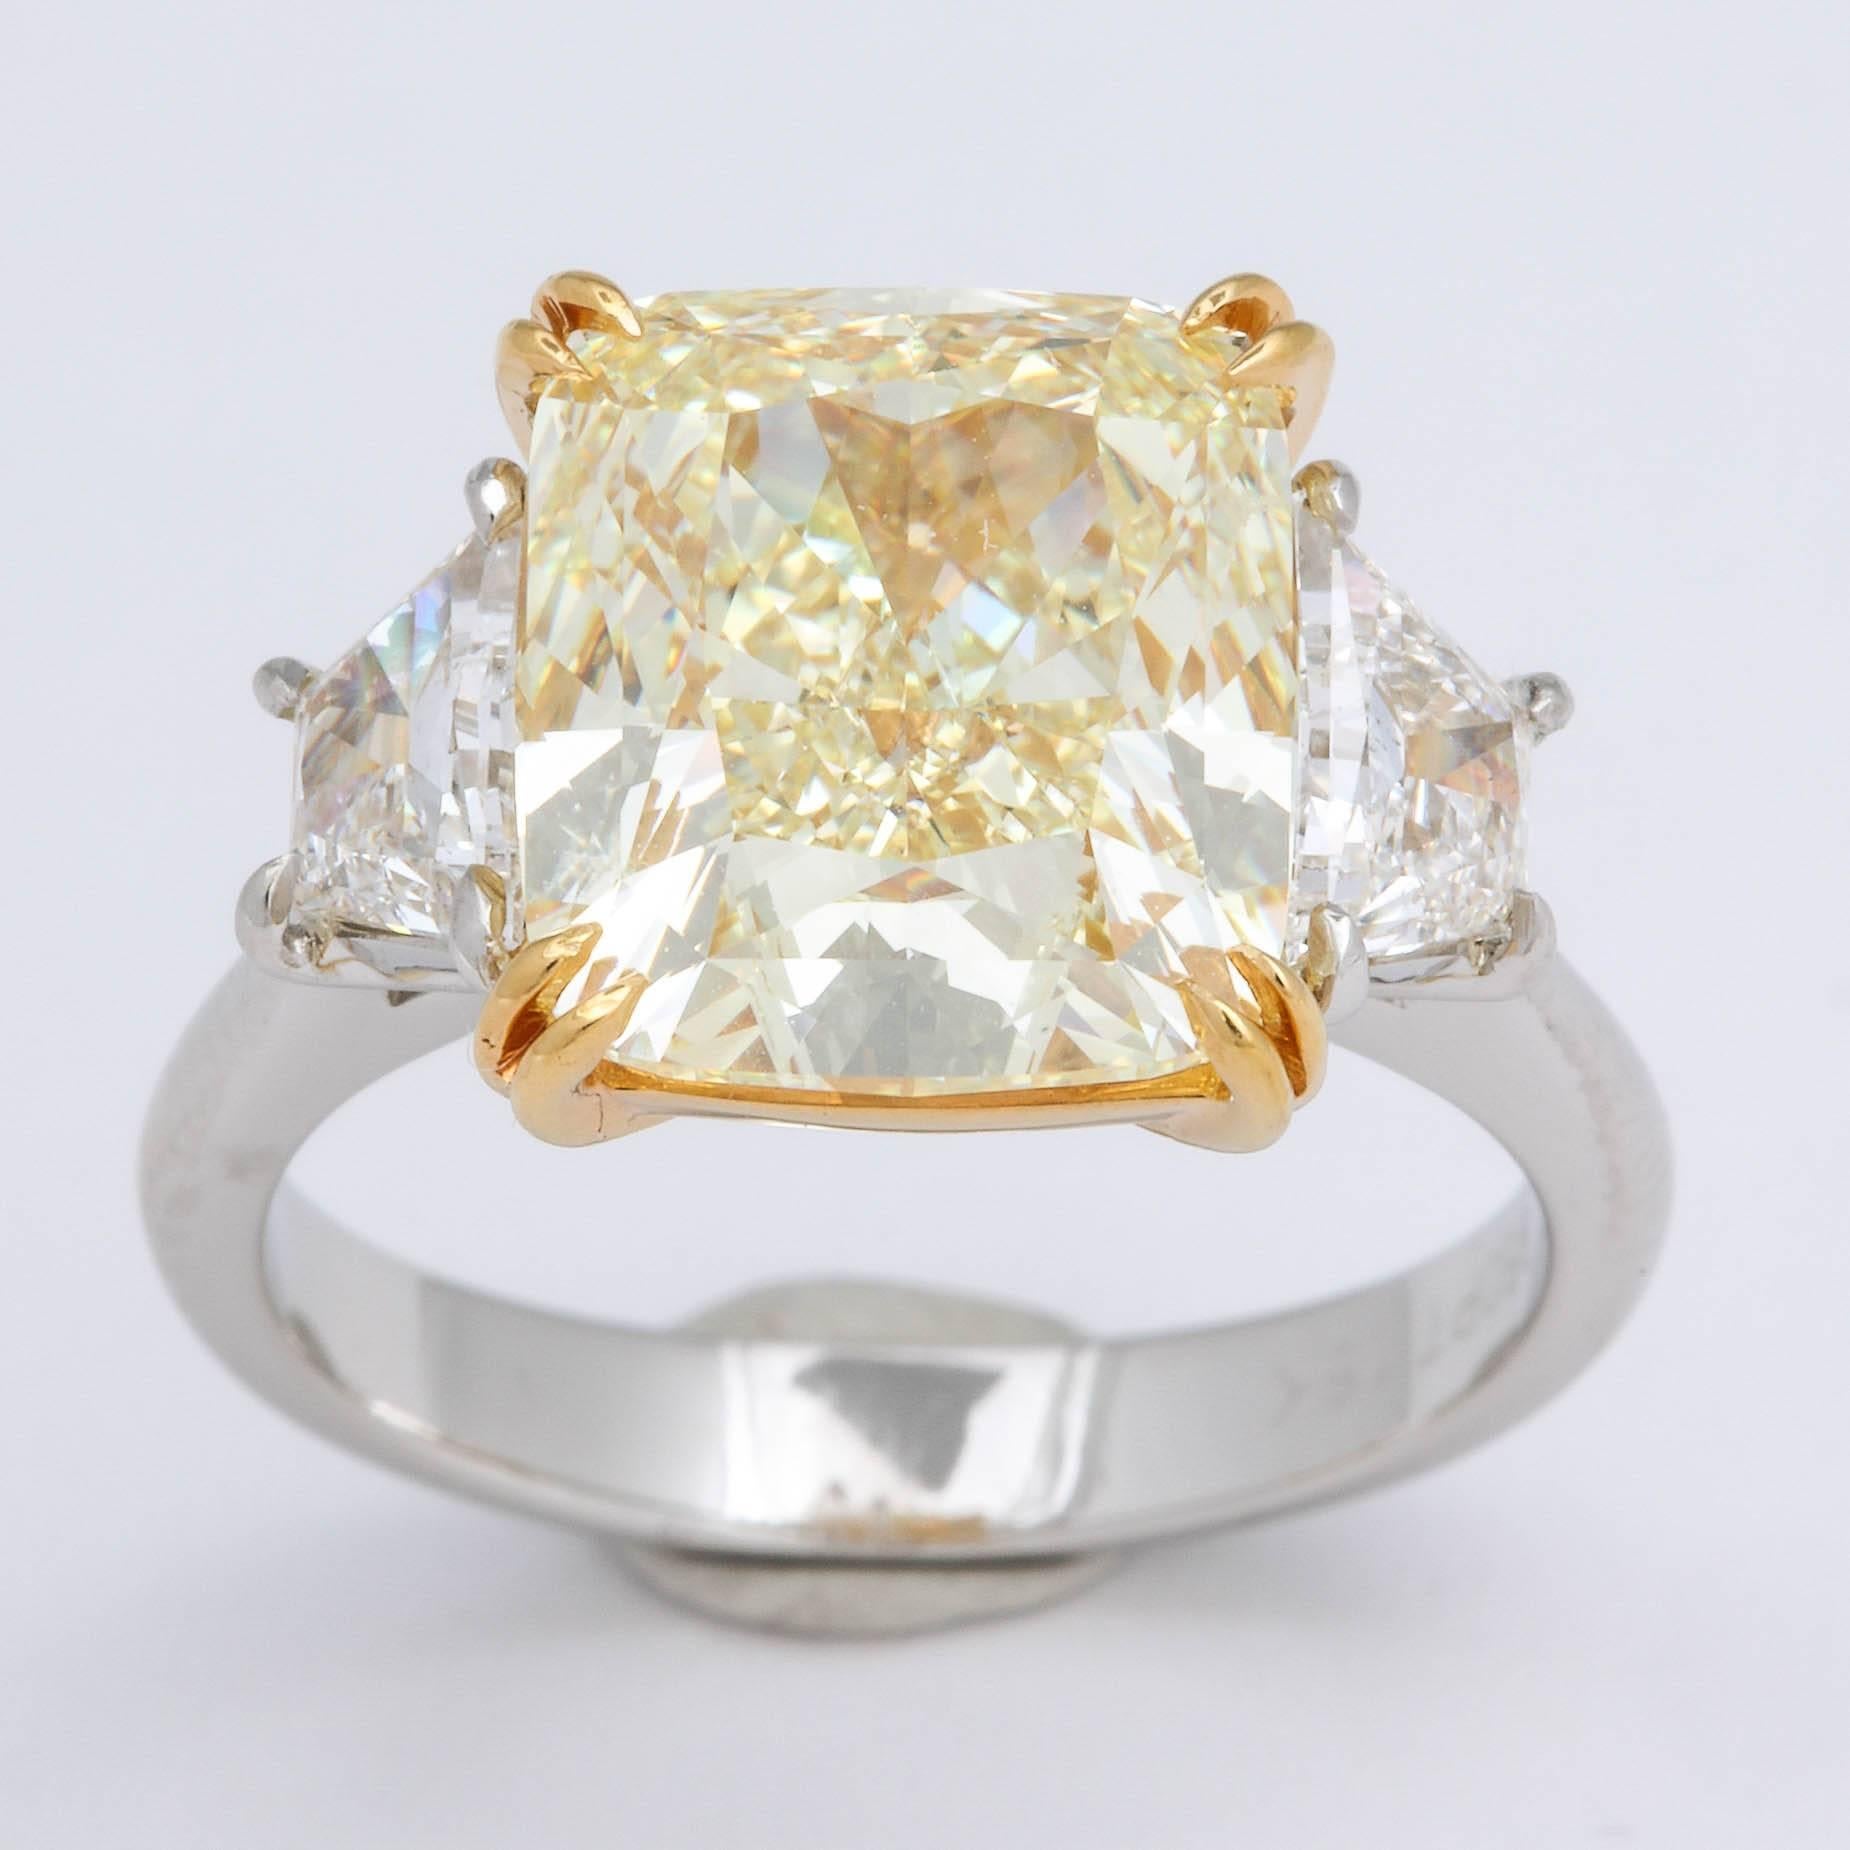 
A FABULOUS RING!!! A BEAUTIFUL ROCK!!

6.28 carats GIA certified Fancy Light Yellow center diamond.

VVS2 clarity -- the diamond is nearly flawless!

The Cushion cut center diamond is set along .81 carats of white, VS trapezoid cut diamonds. 

Set